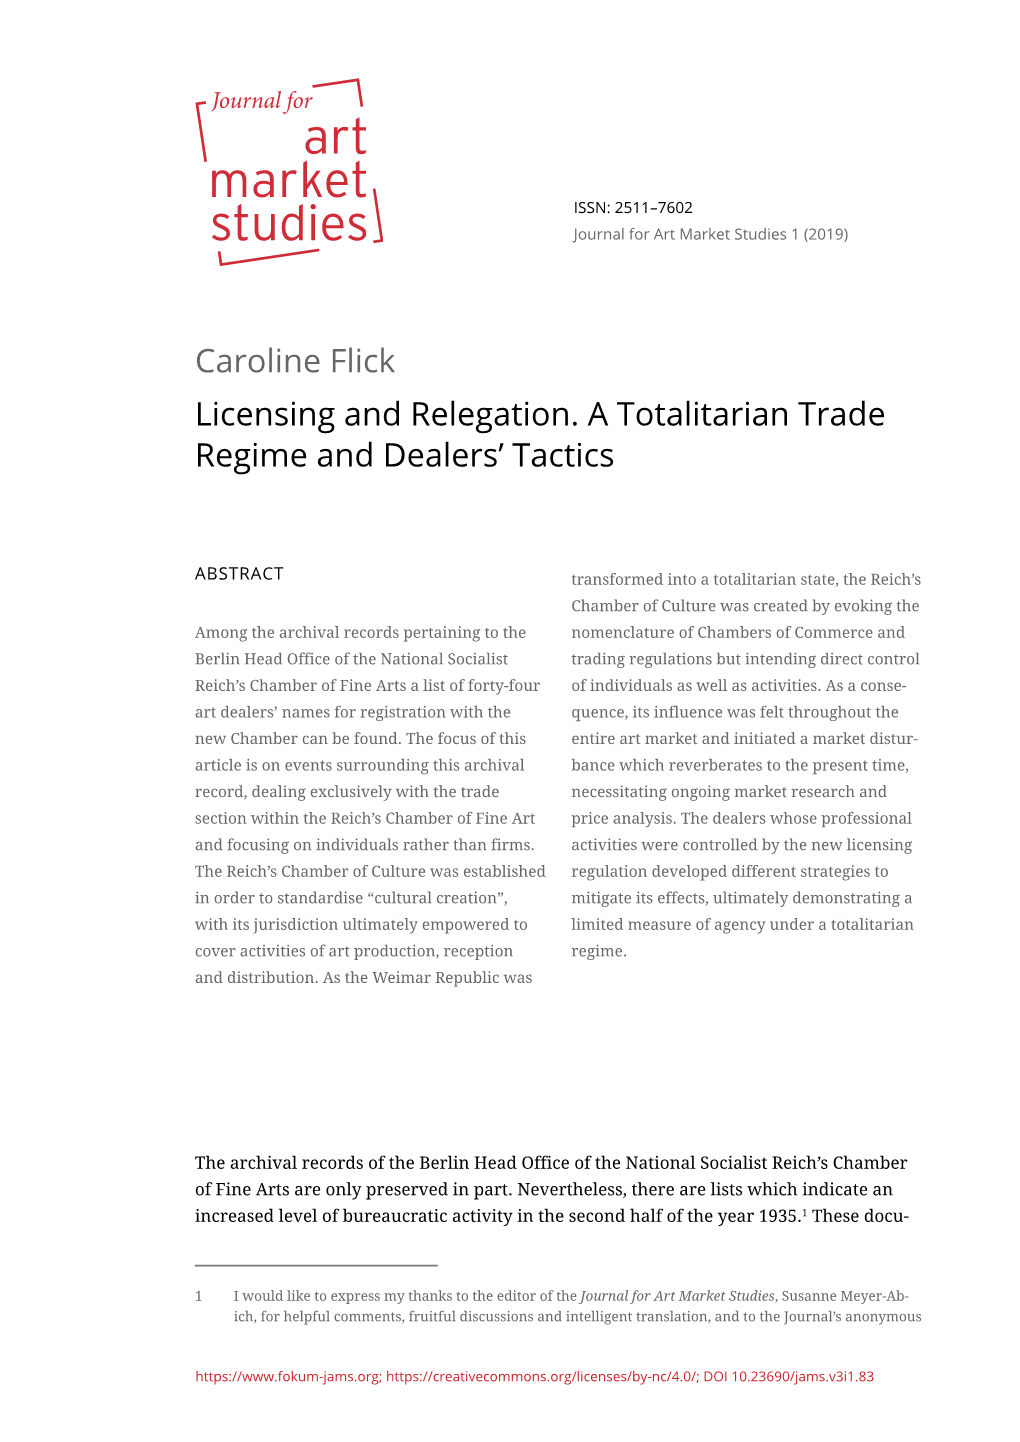 Caroline Flick Licensing and Relegation. a Totalitarian Trade Regime and Dealers' Tactics